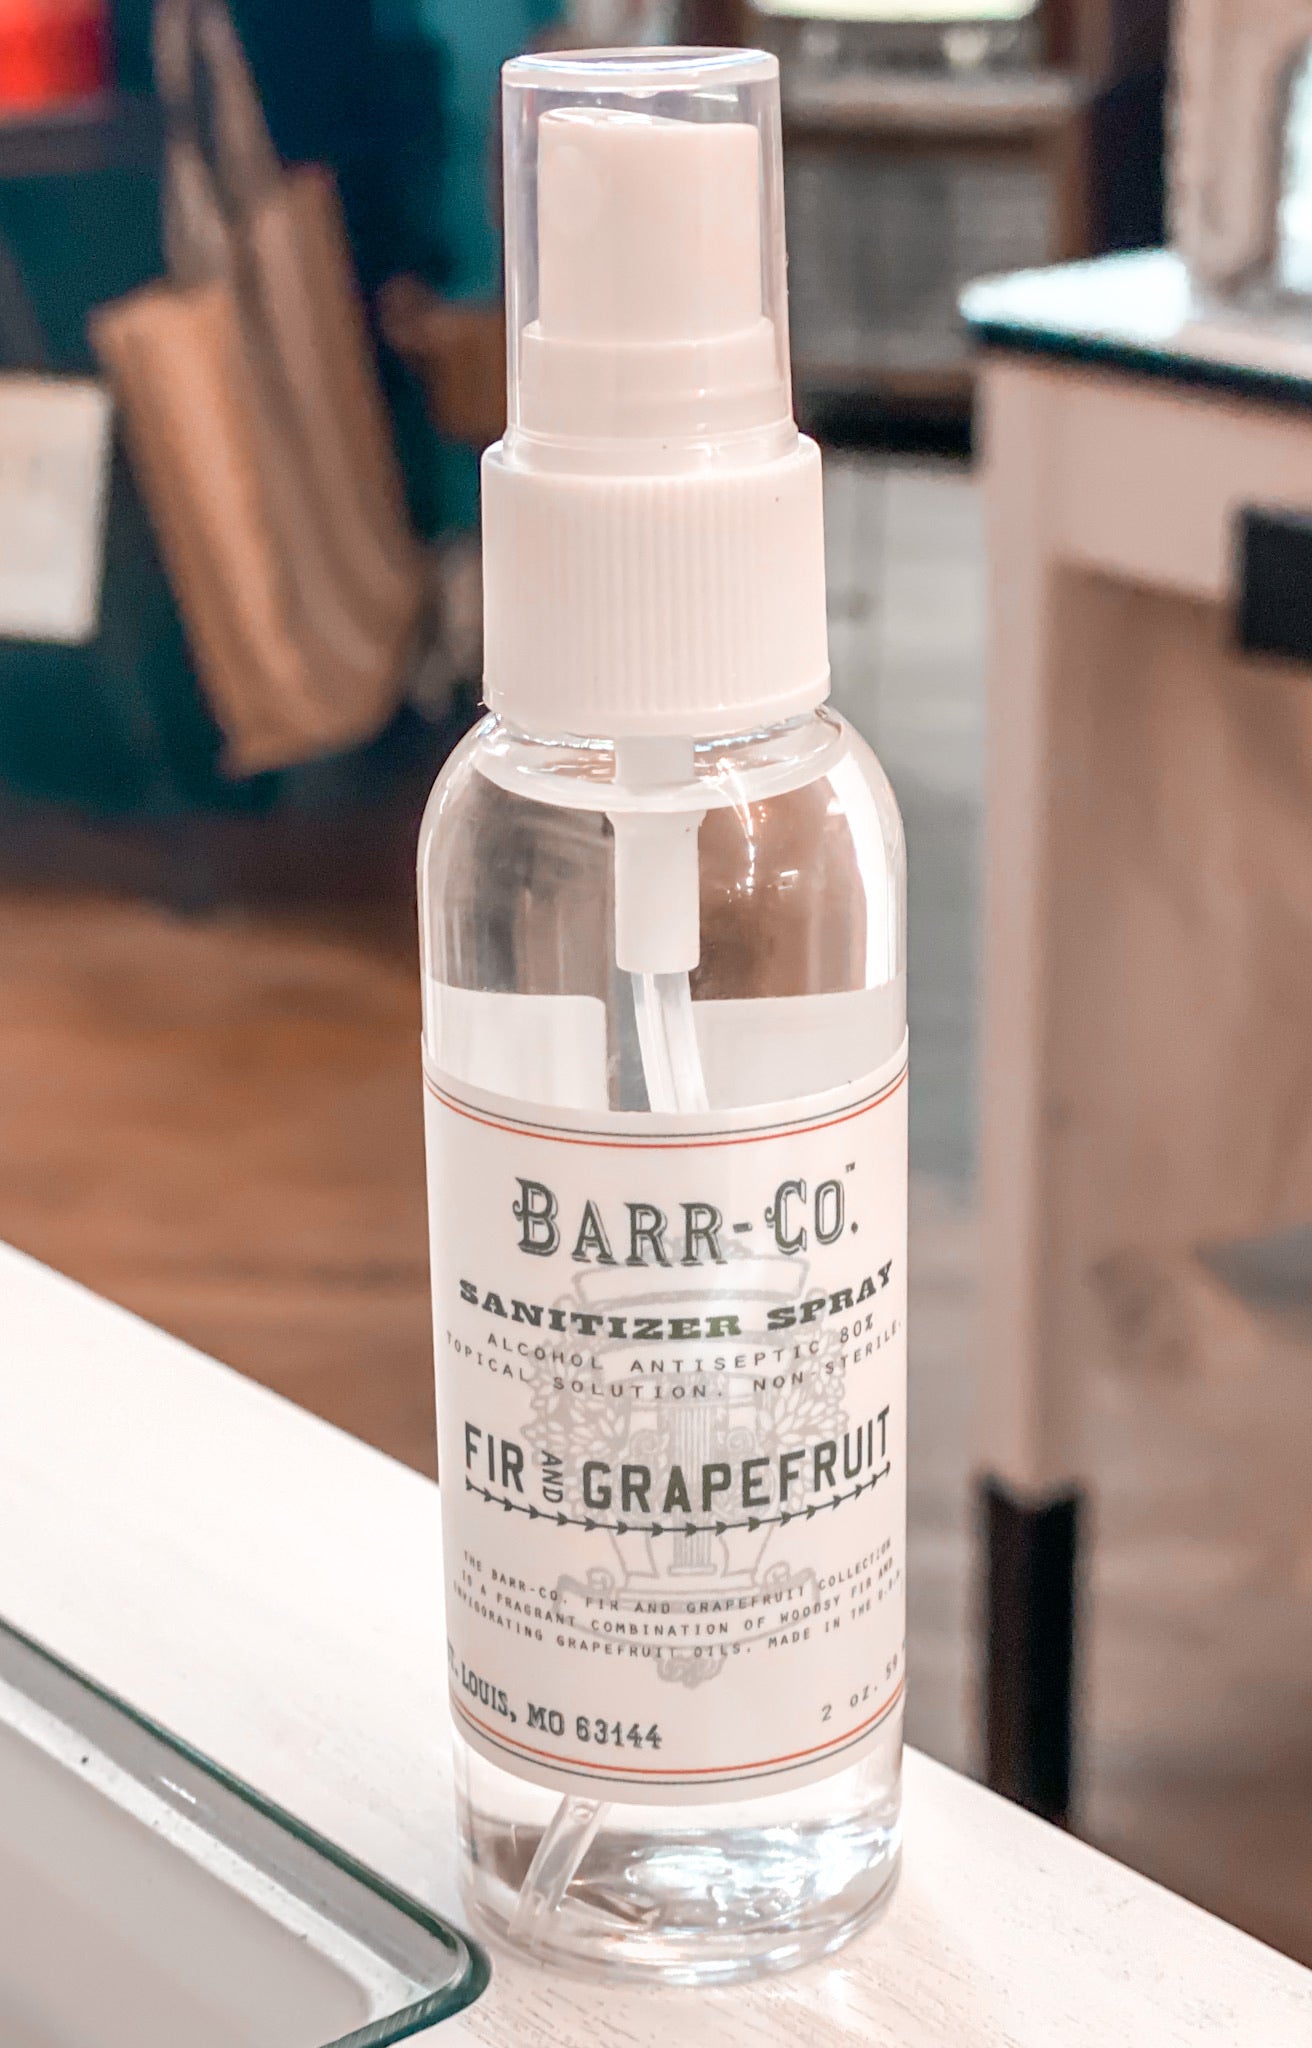 Barr-Co. Fir and Grapefruit Sanitizer Spray